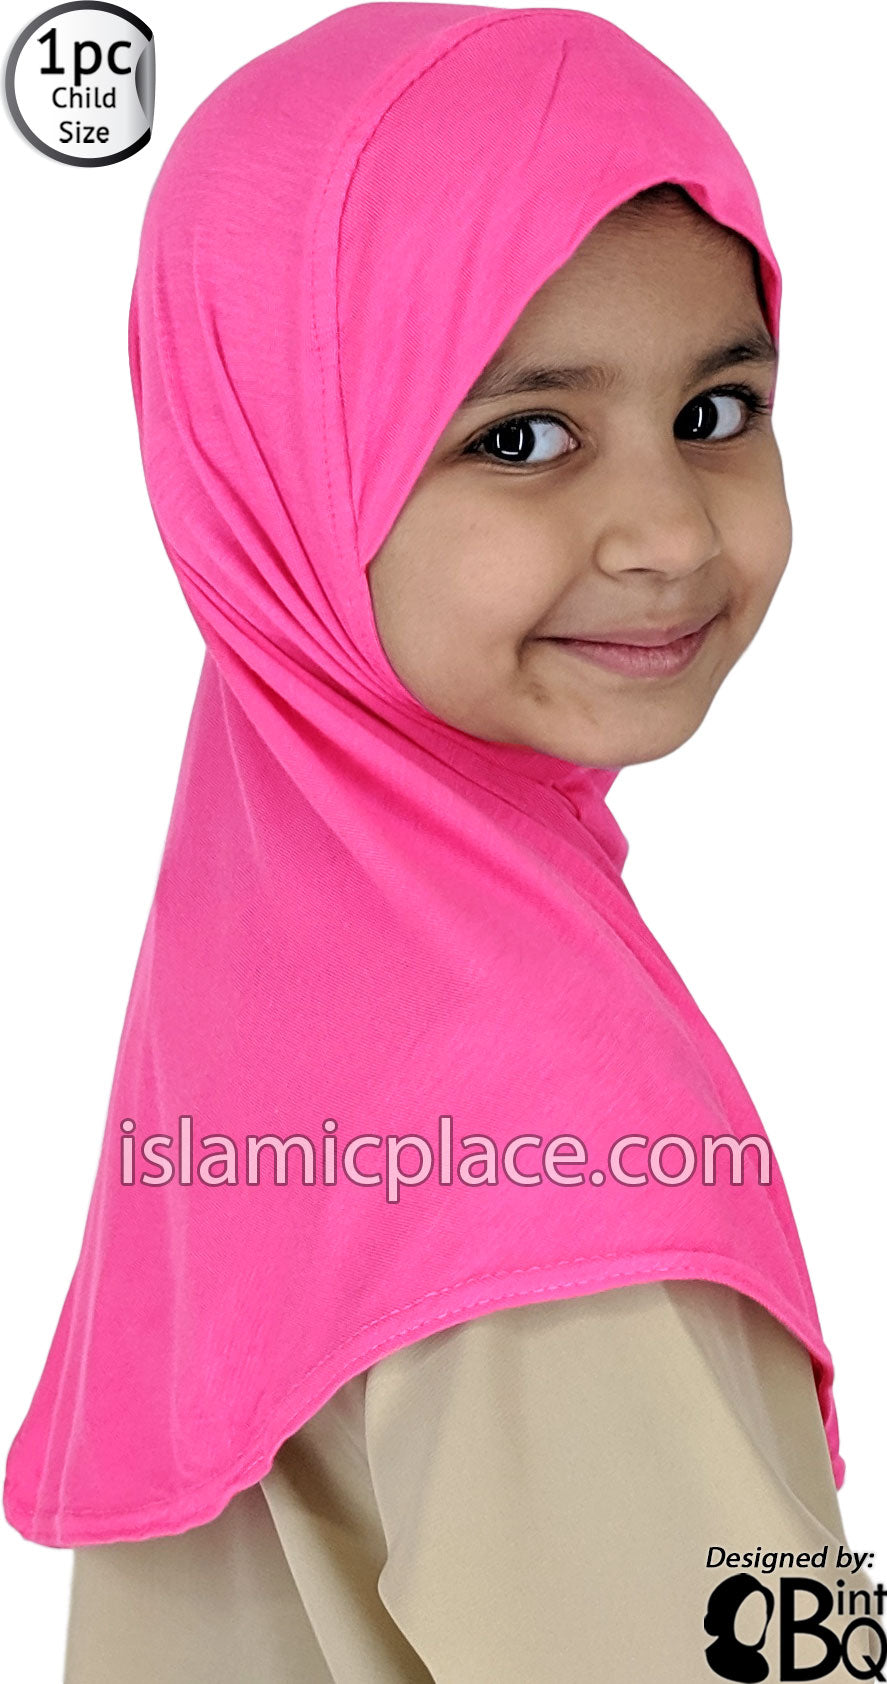 Bubble Gum Pink - Plain Girl size (1-piece) Hijab Al-Amira